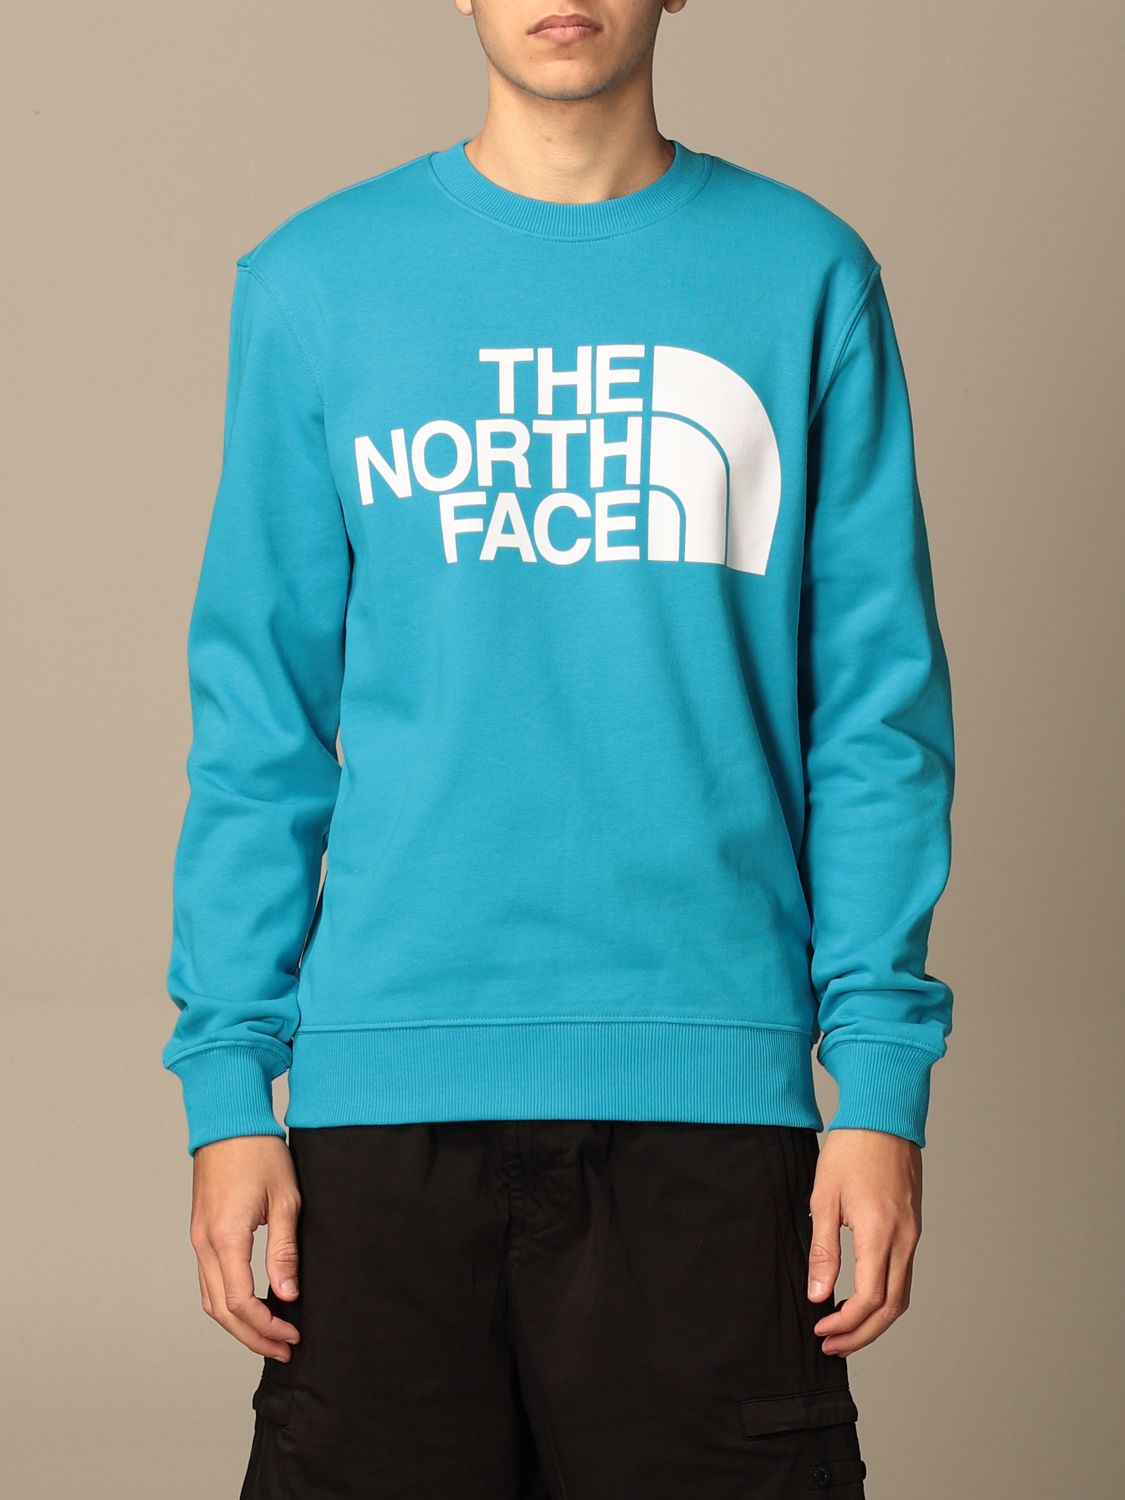 the-north-face-sweatshirt-men-turquoise-sweatshirt-the-north-face